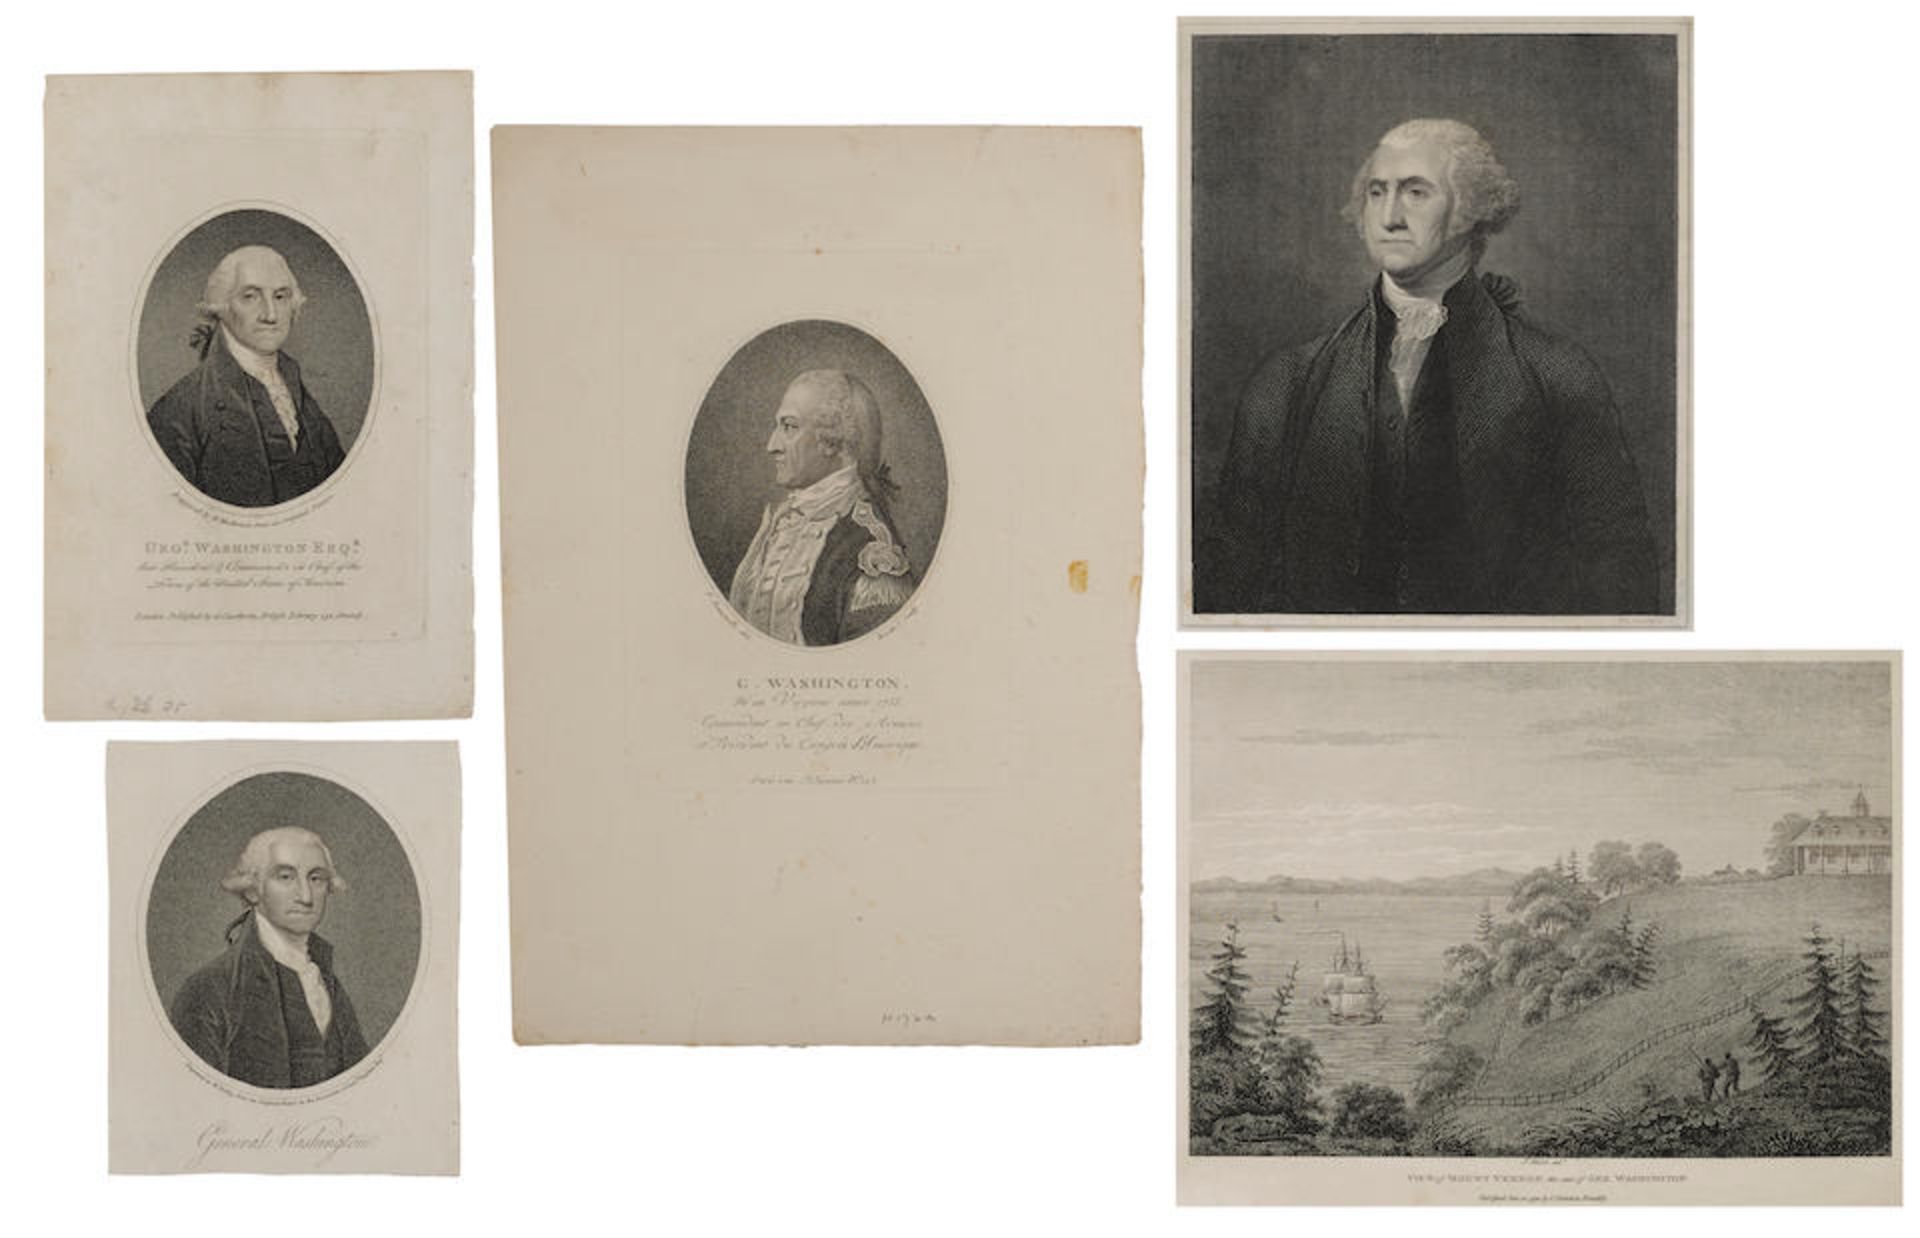 A COLLECTION OF WASHINGTON ENGRAVINGS. 8 engraved prints of Washington, including